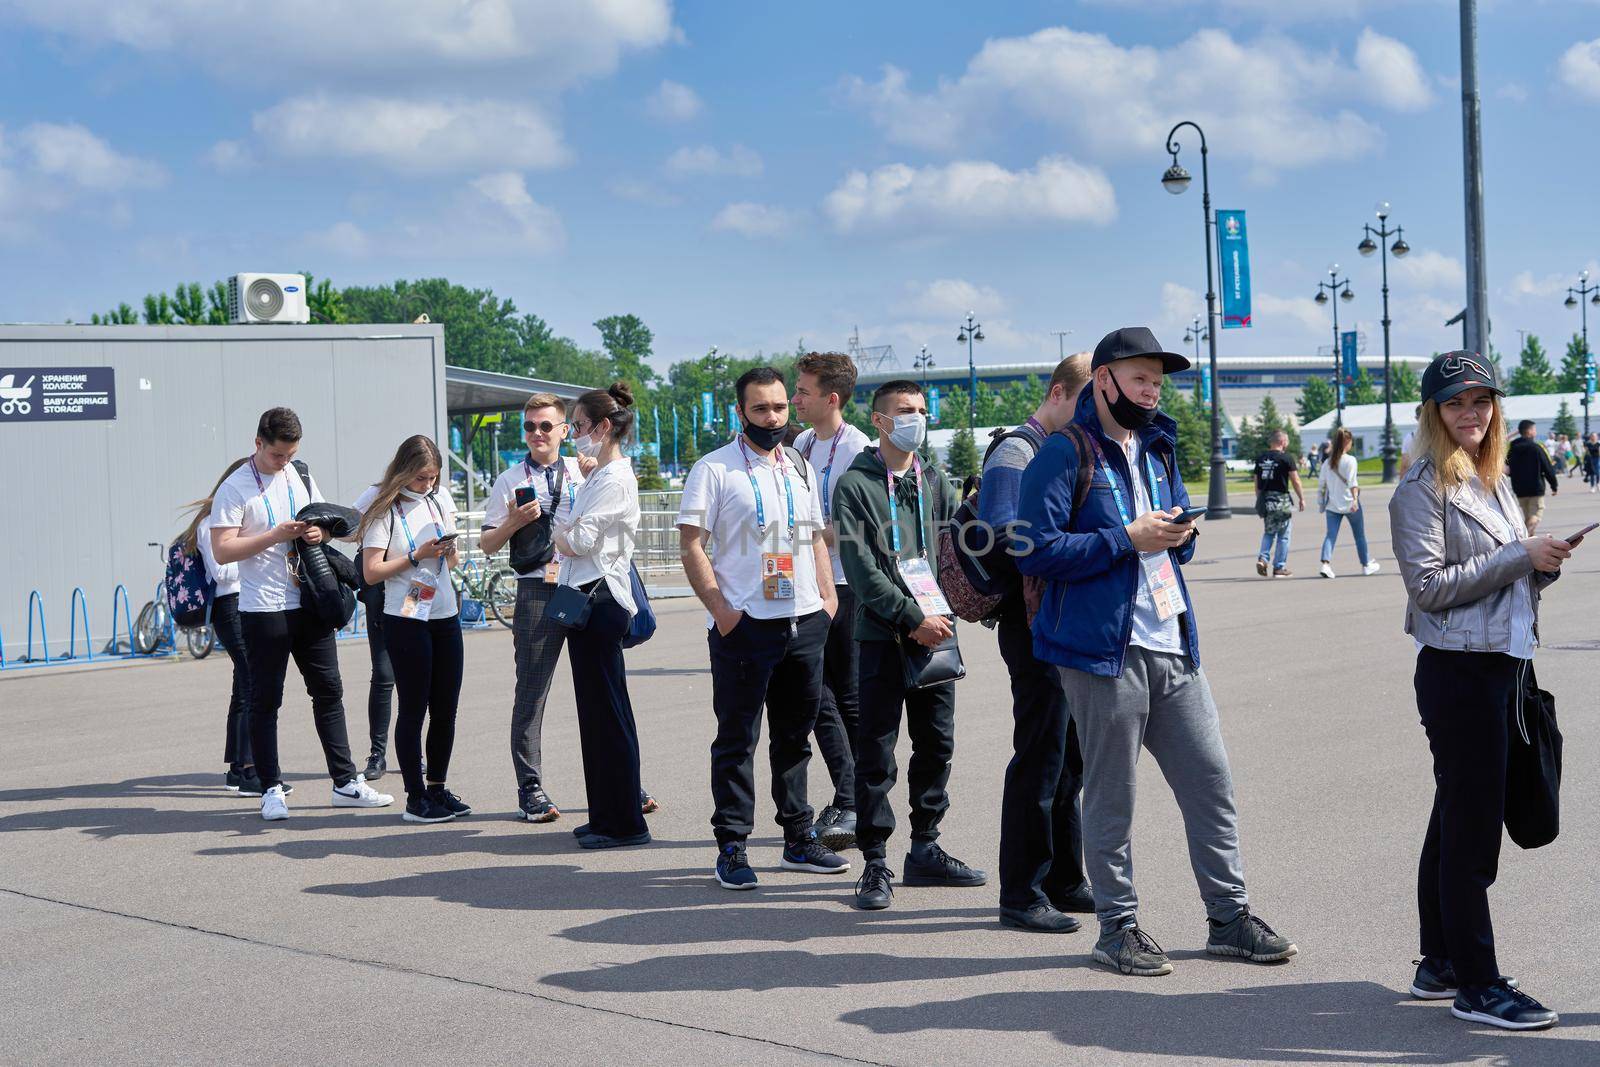 Pass for volunteers to Zenit Stadium during Euro 2020 championship Petersburg by vizland